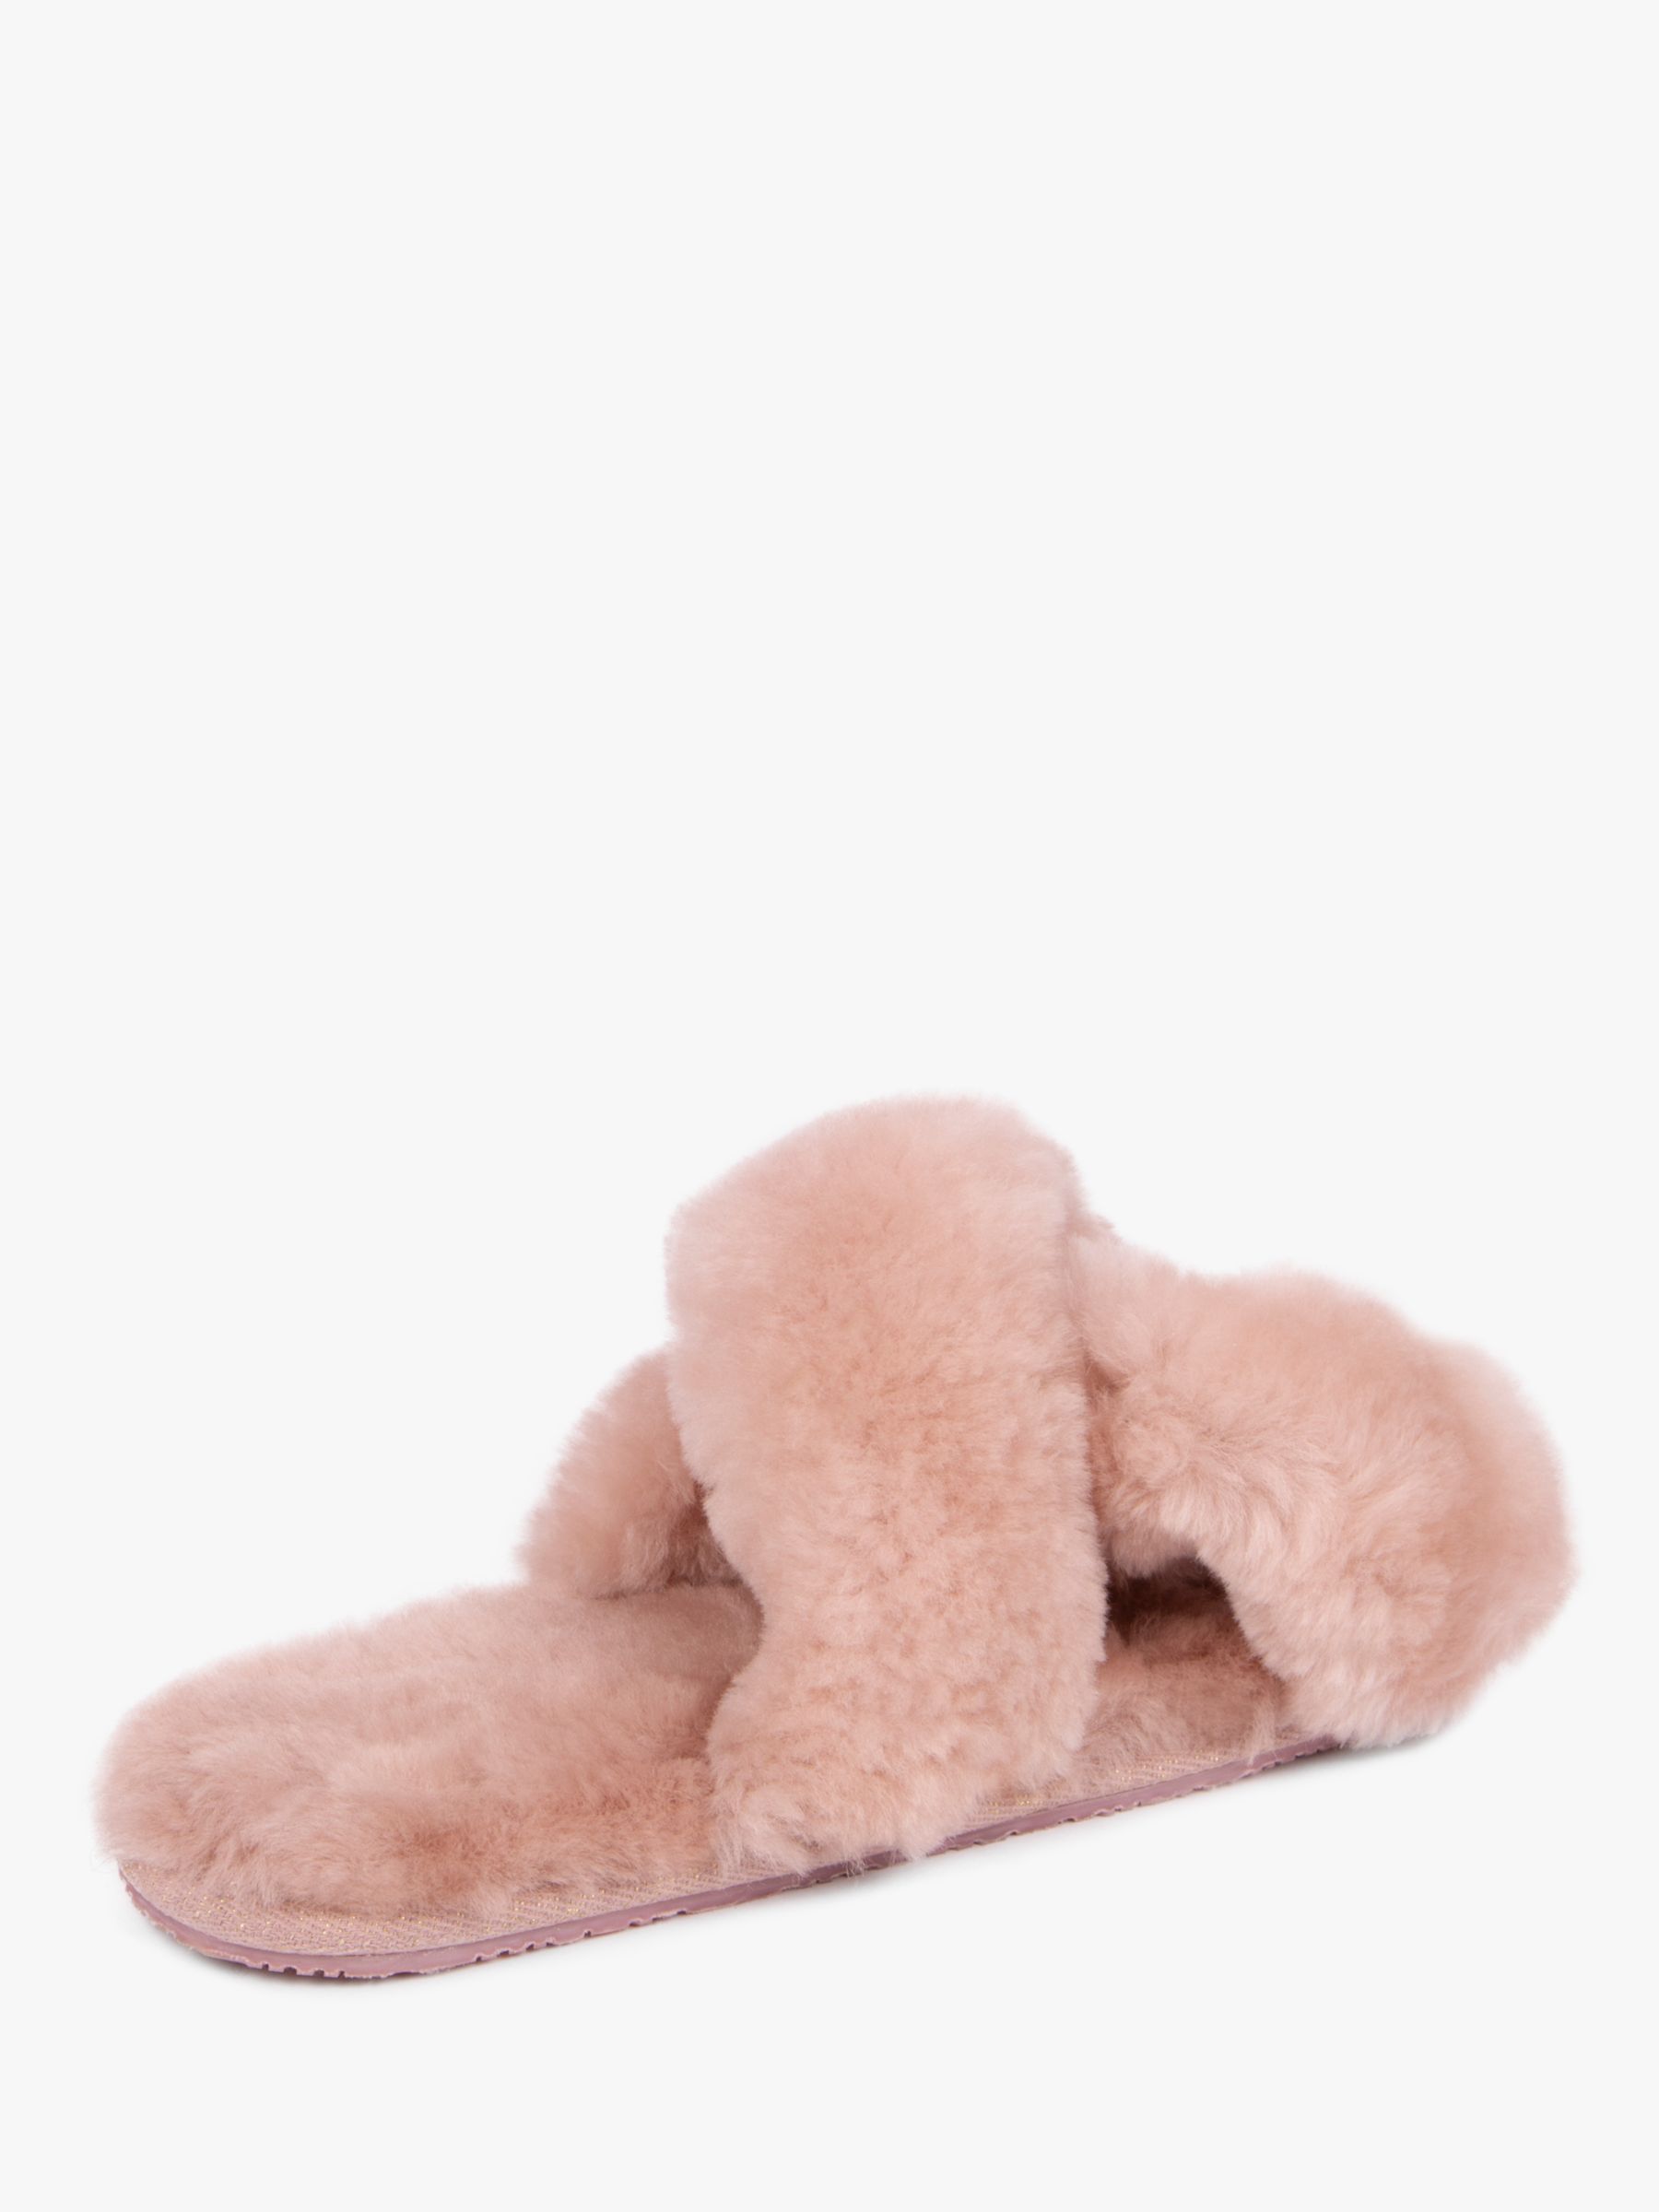 Buy Just Sheepskin Daisy Sheepskin Cross Strap Slippers Online at johnlewis.com